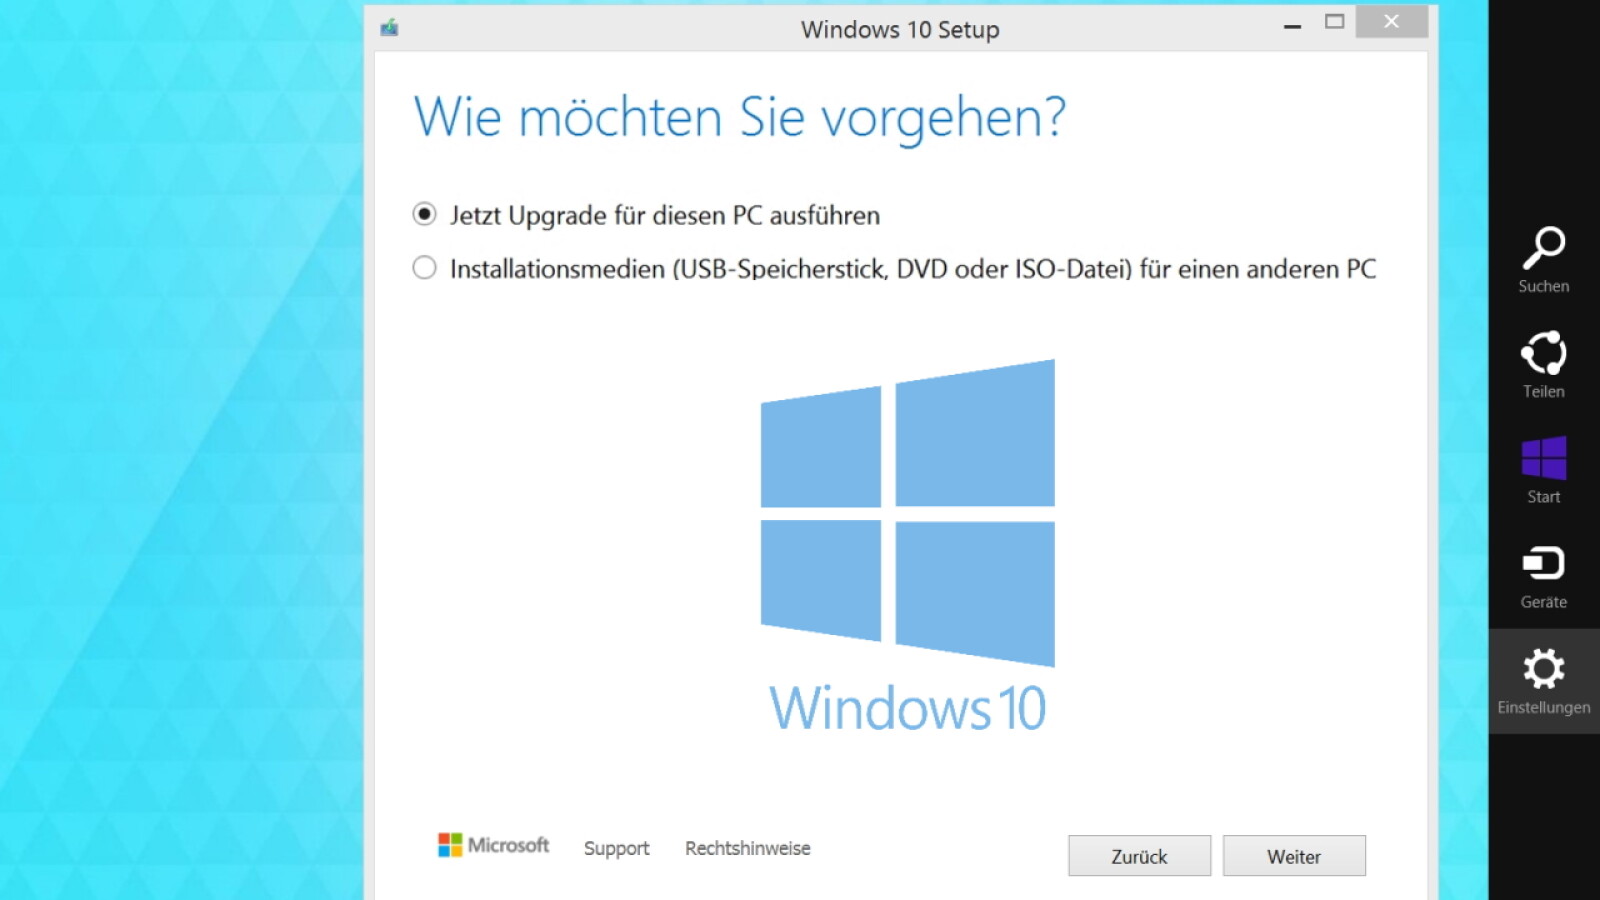 windows 8.1 free upgrade to 10